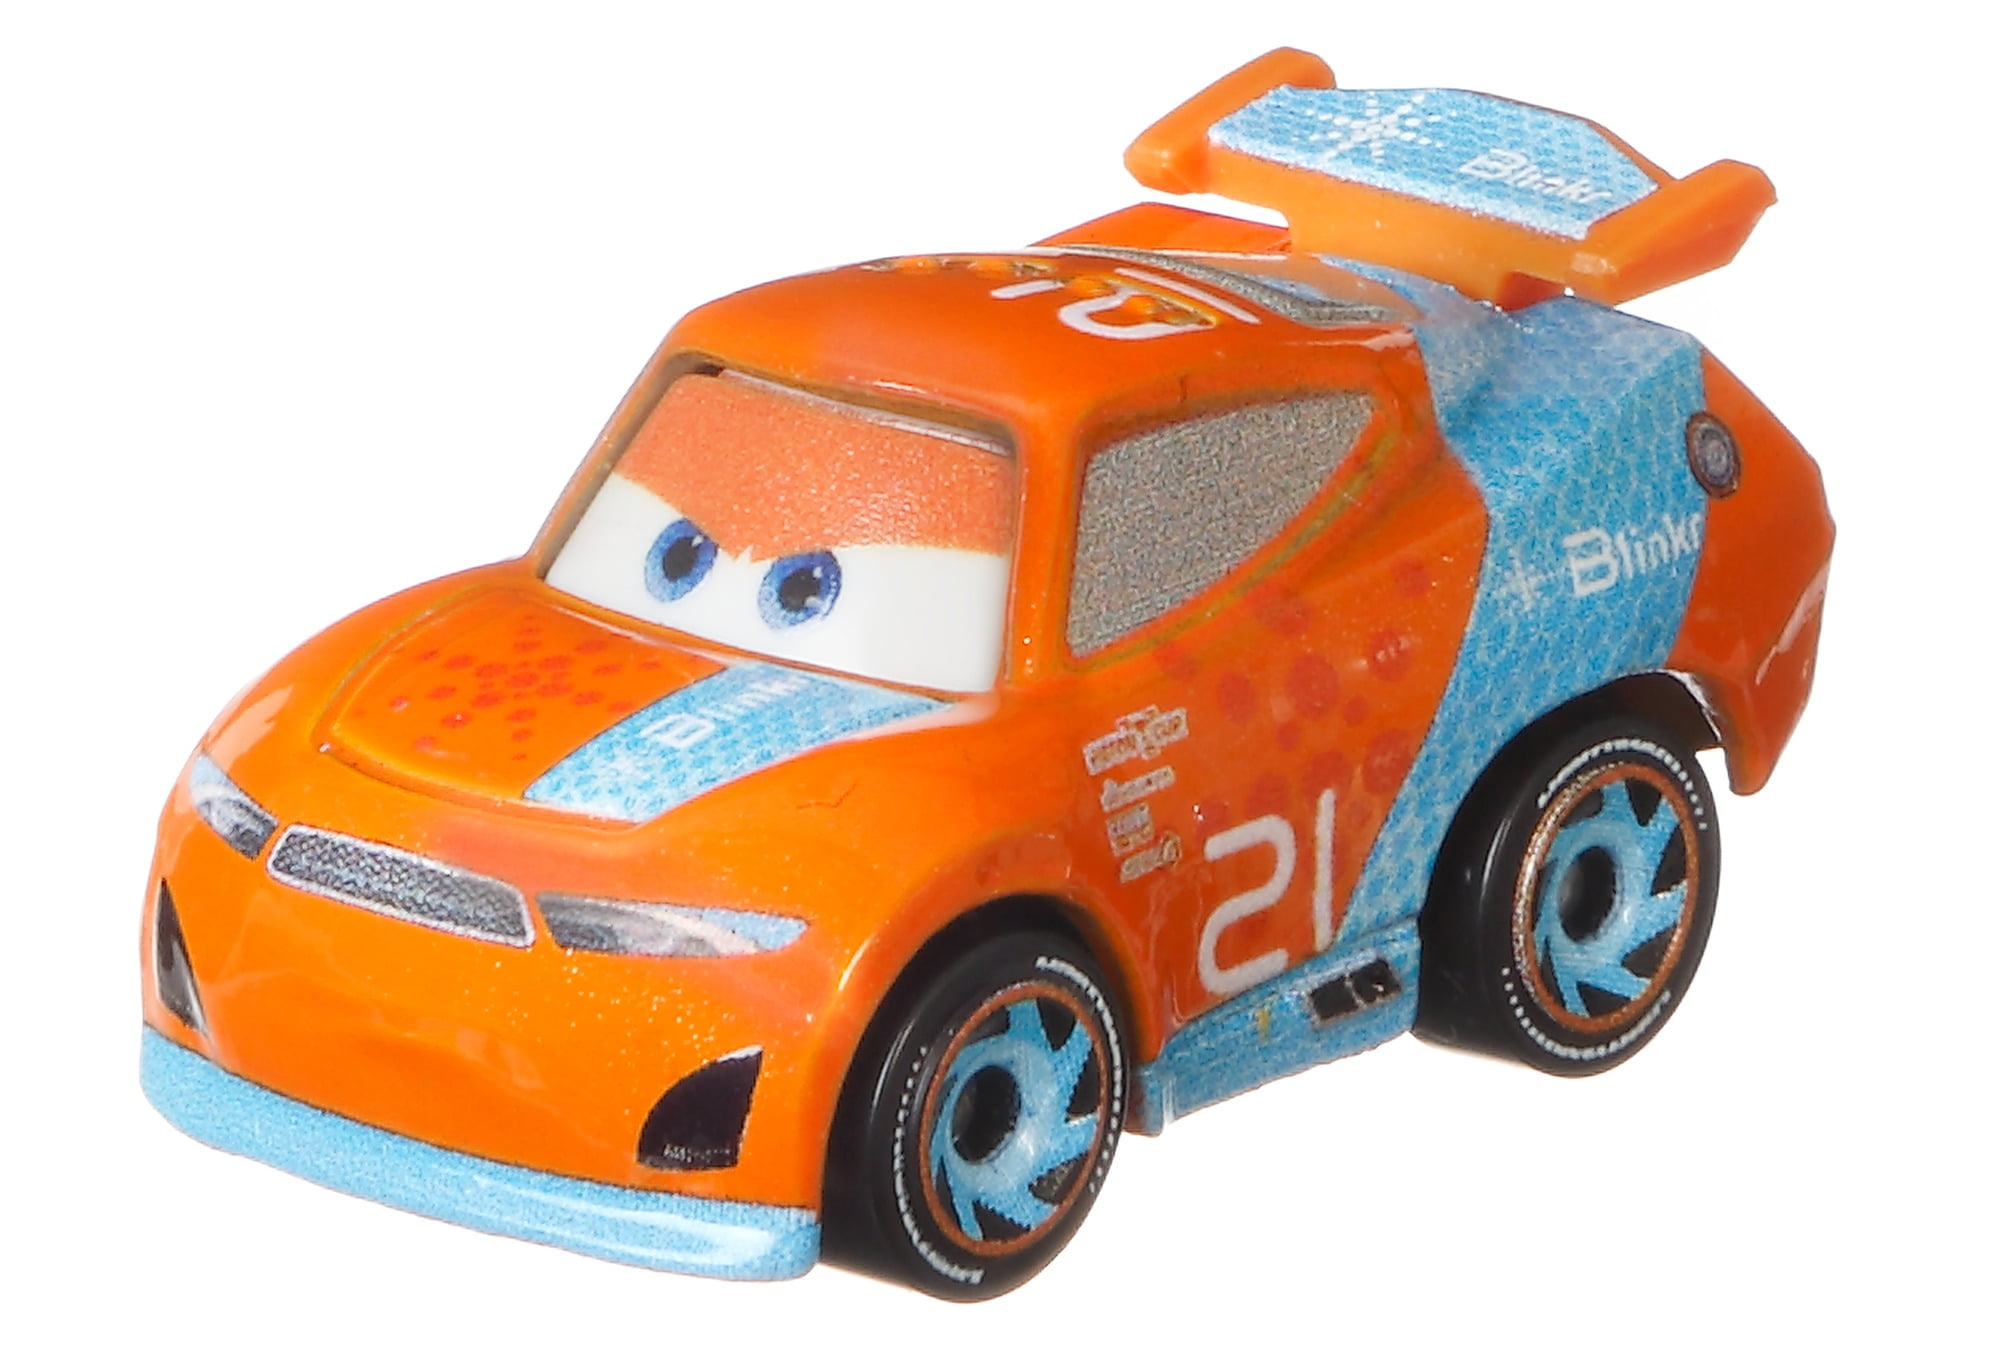 Tomica Disney Pixar Cars 3 C-25 Ryan "Inside" Laney stock car SCARCE BOXED NEW 